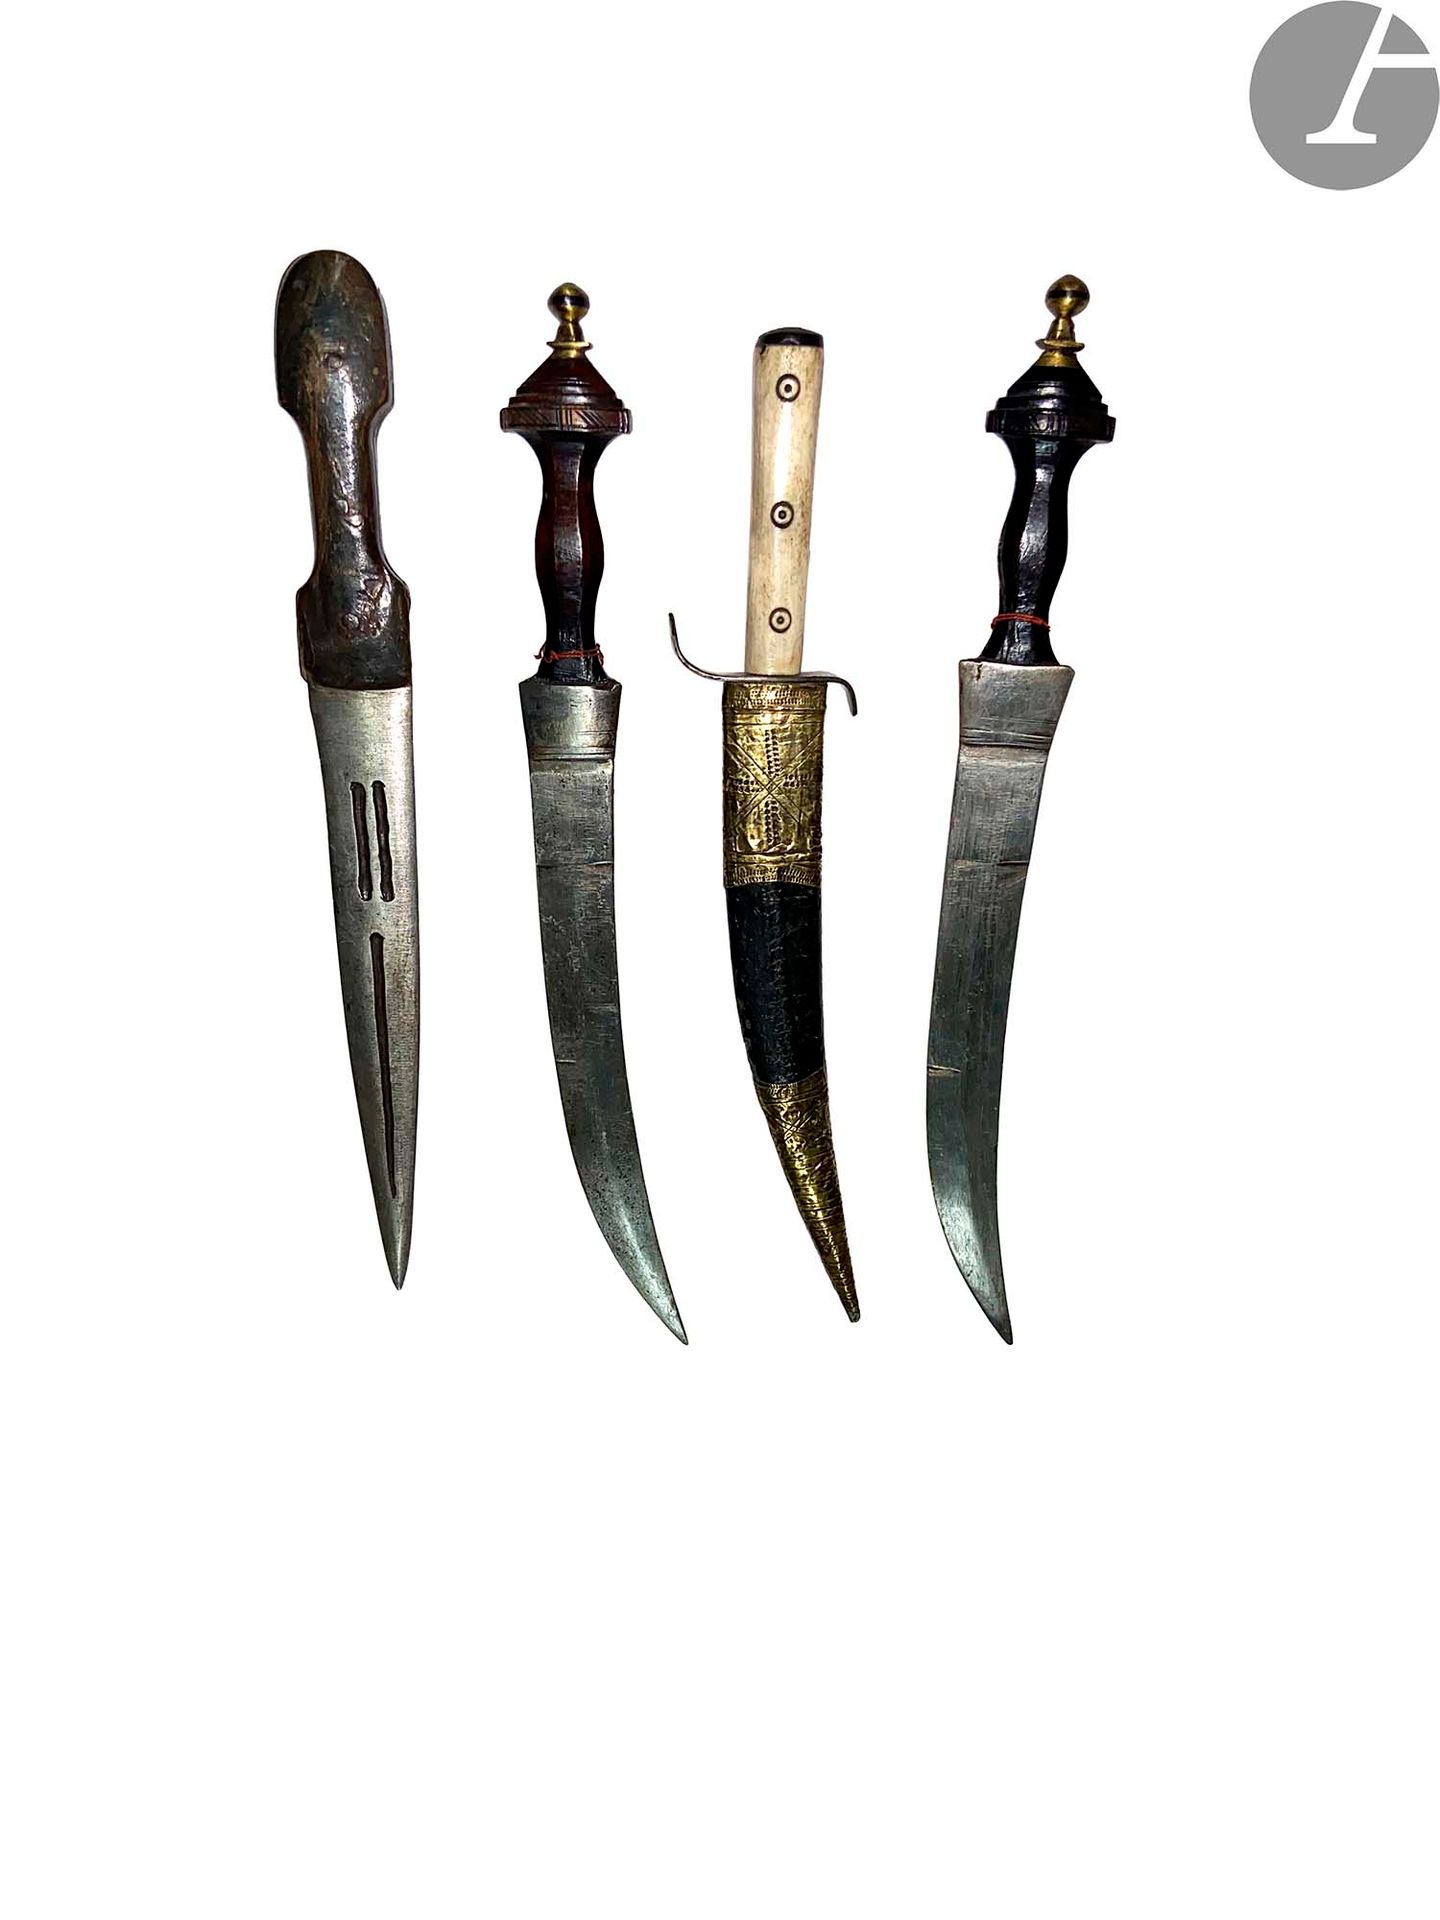 Null 四把非洲黑人匕首。
三个S.F.木制和骨制手柄。
A.B.E.